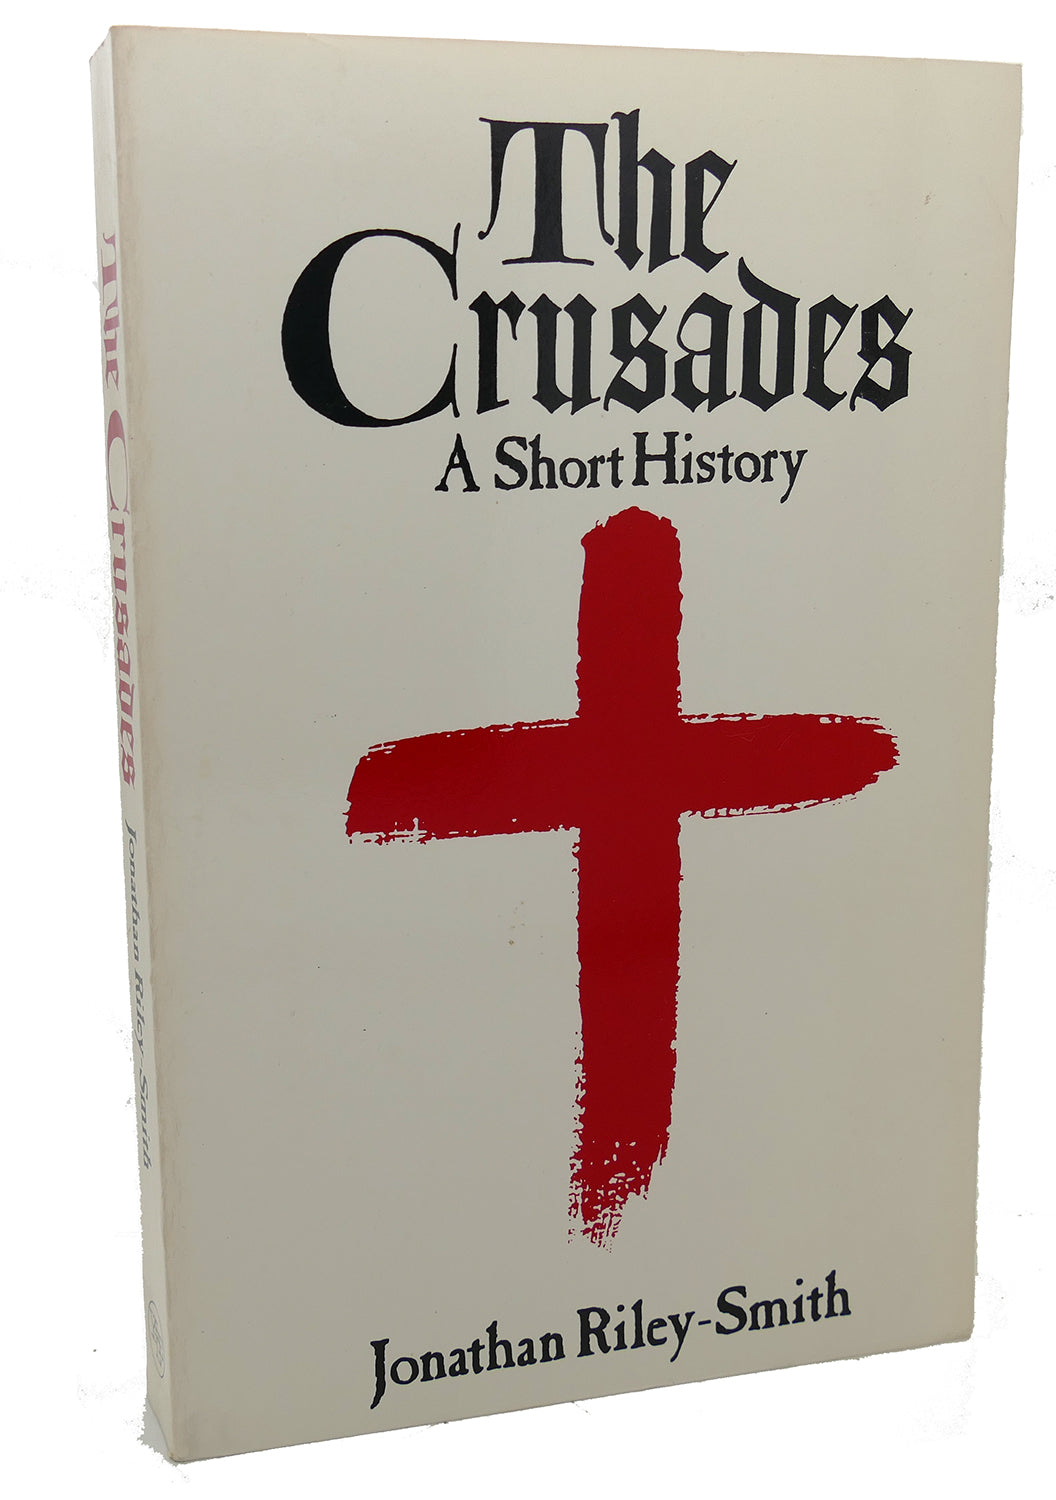 The Crusades: A Short History, by Jonathan Riley Smith